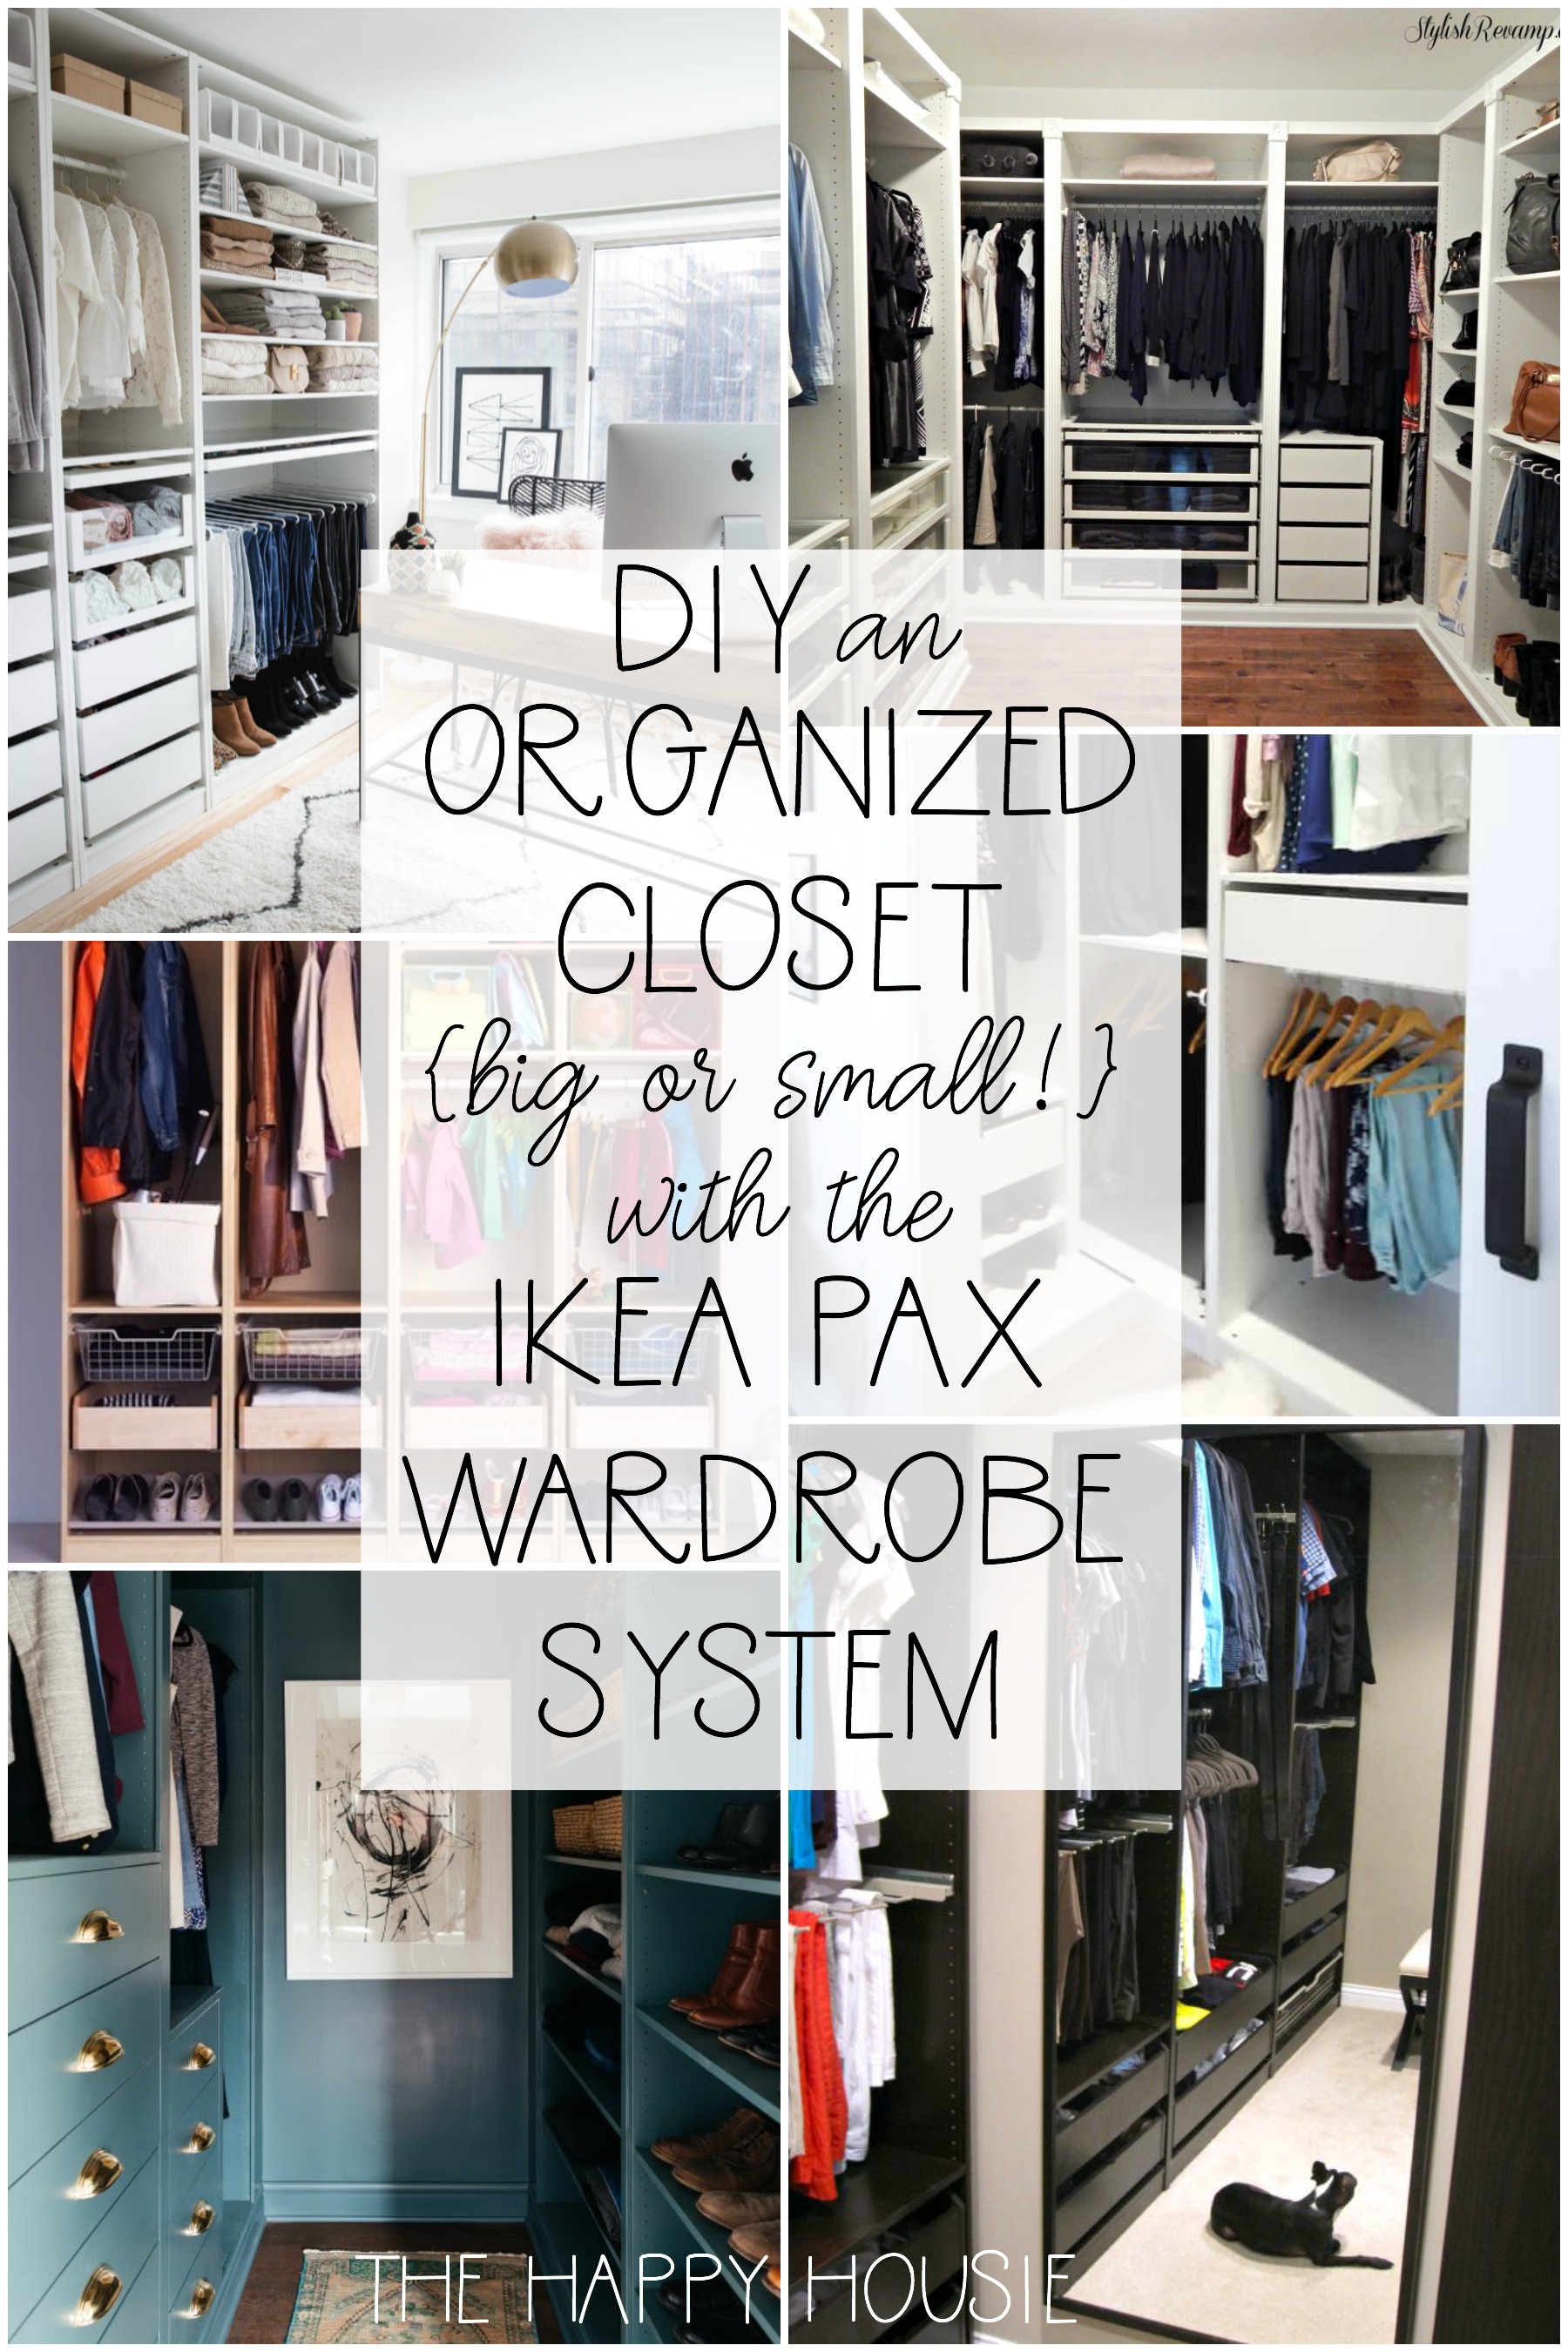 DIY an Organized Closet graphic.